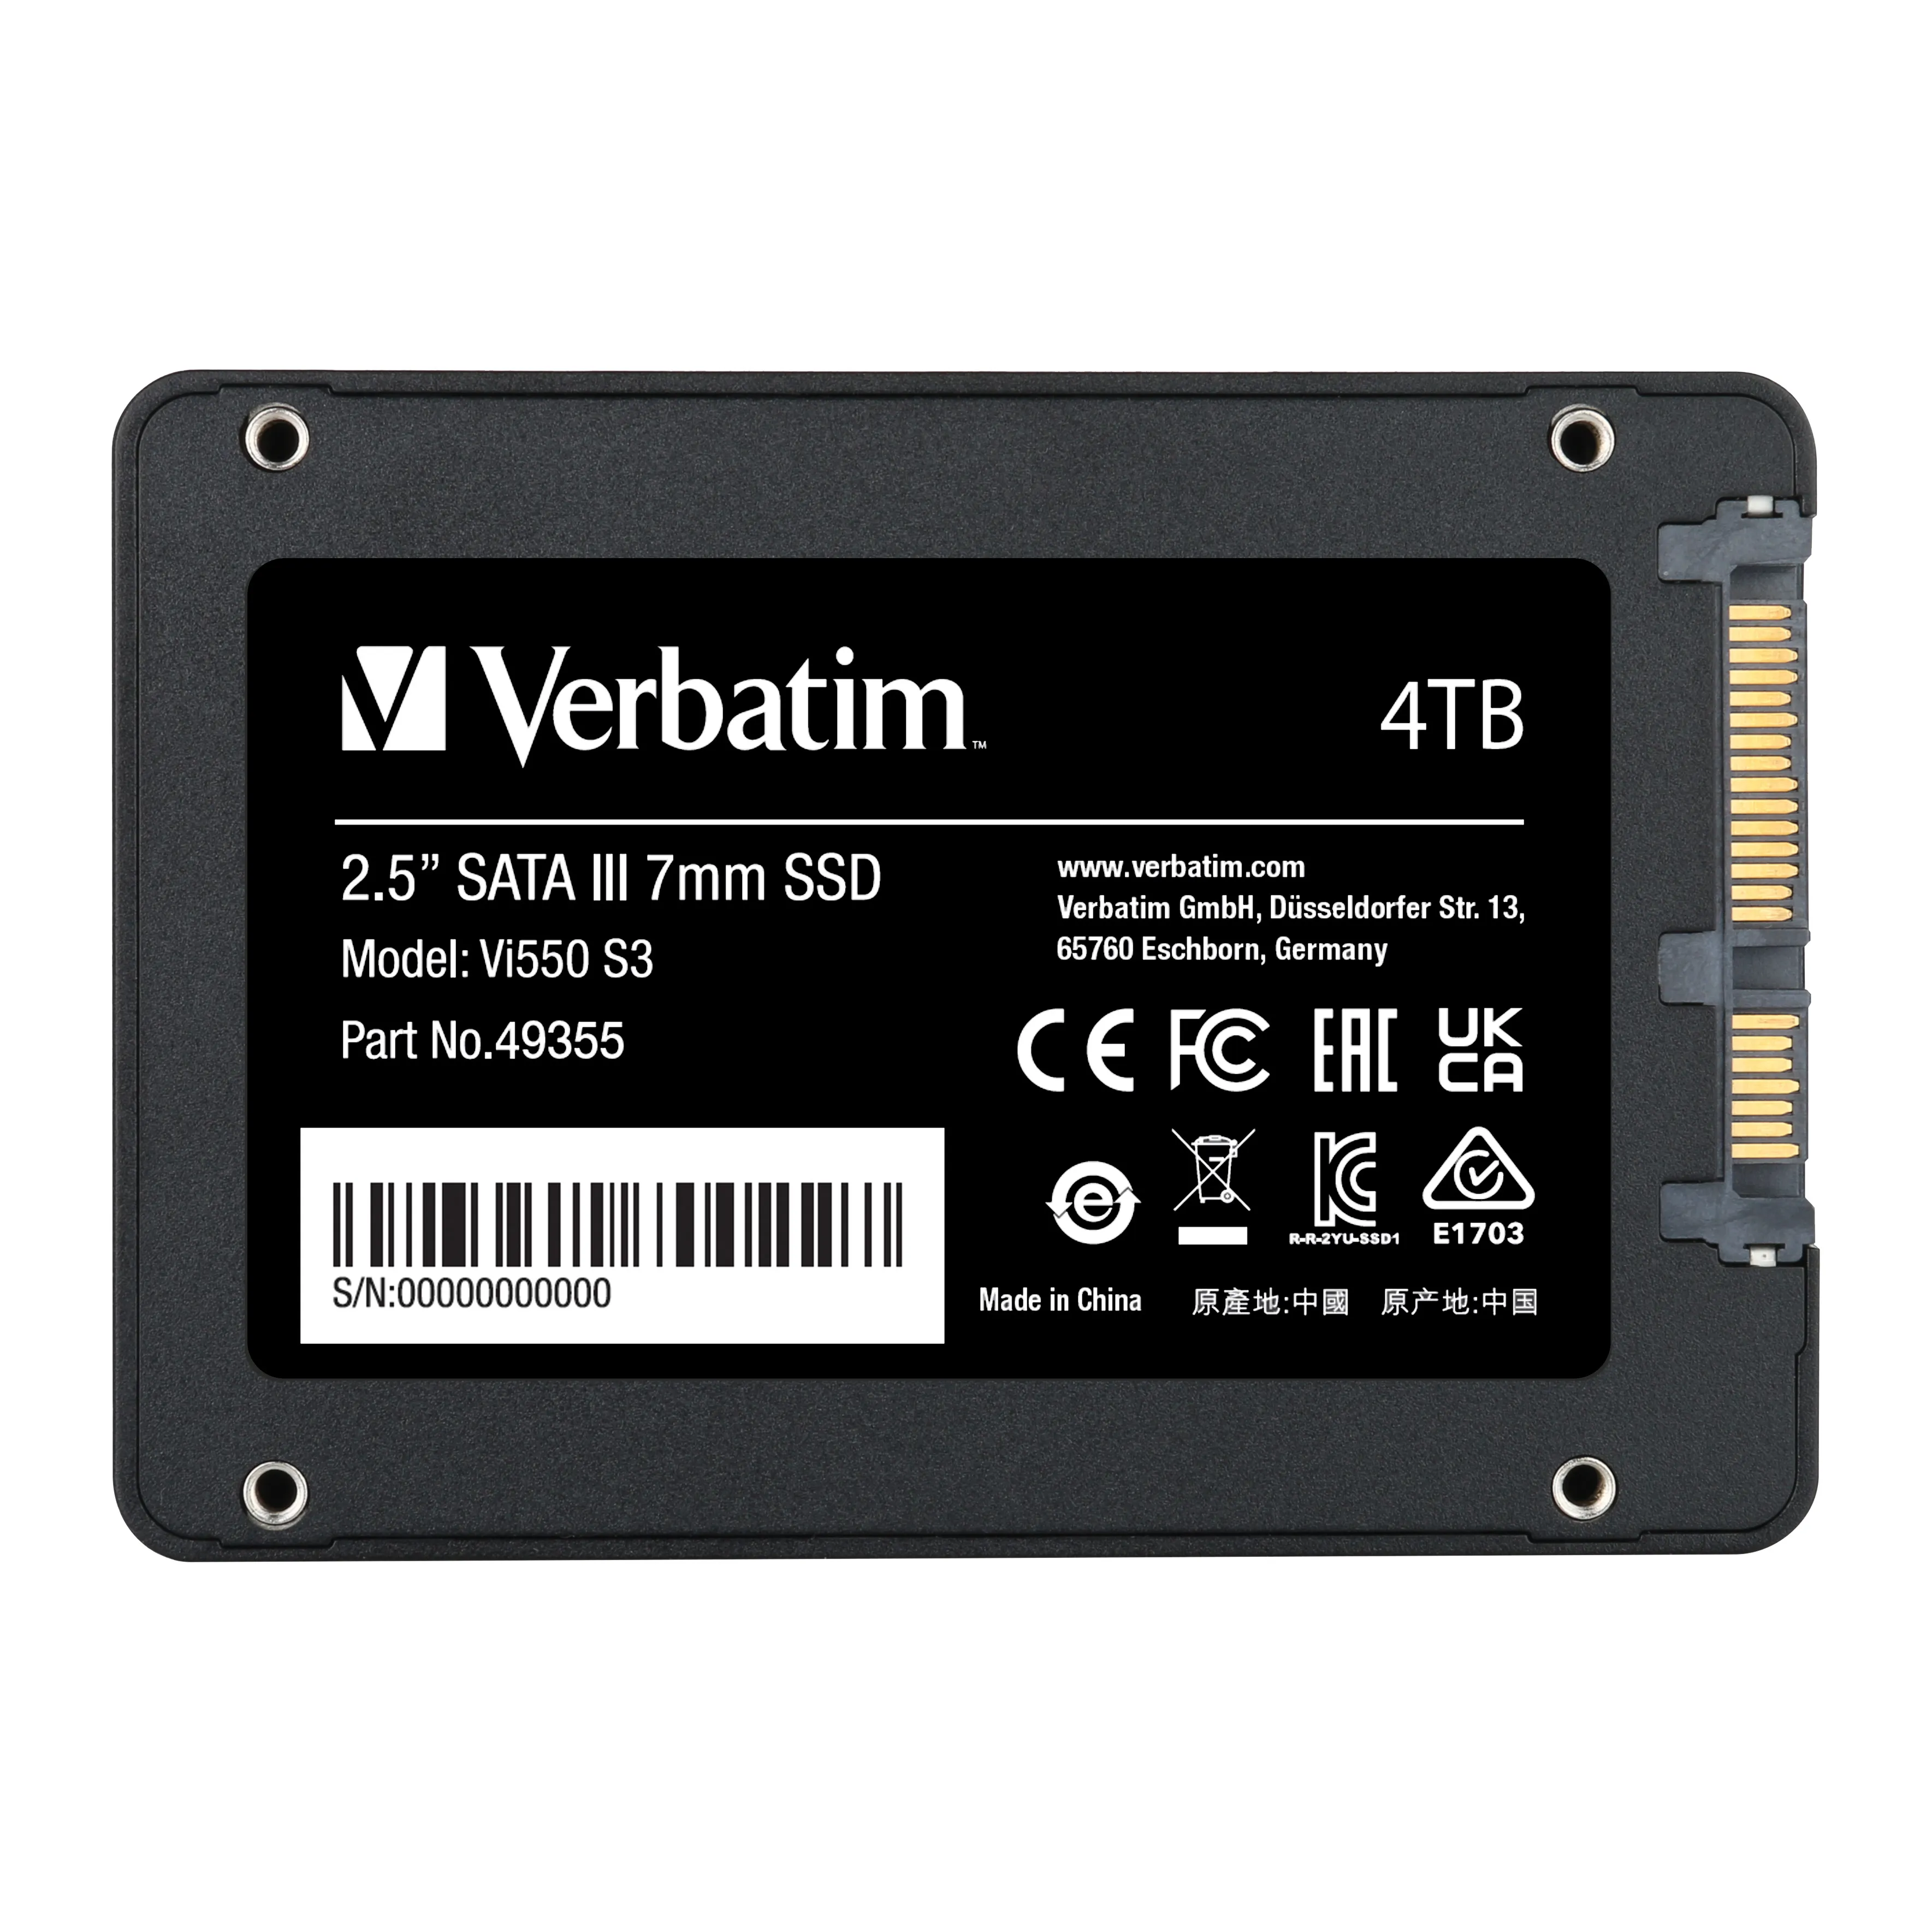 Vente Verbatim Vi550 S3 Verbatim au meilleur prix - visuel 6